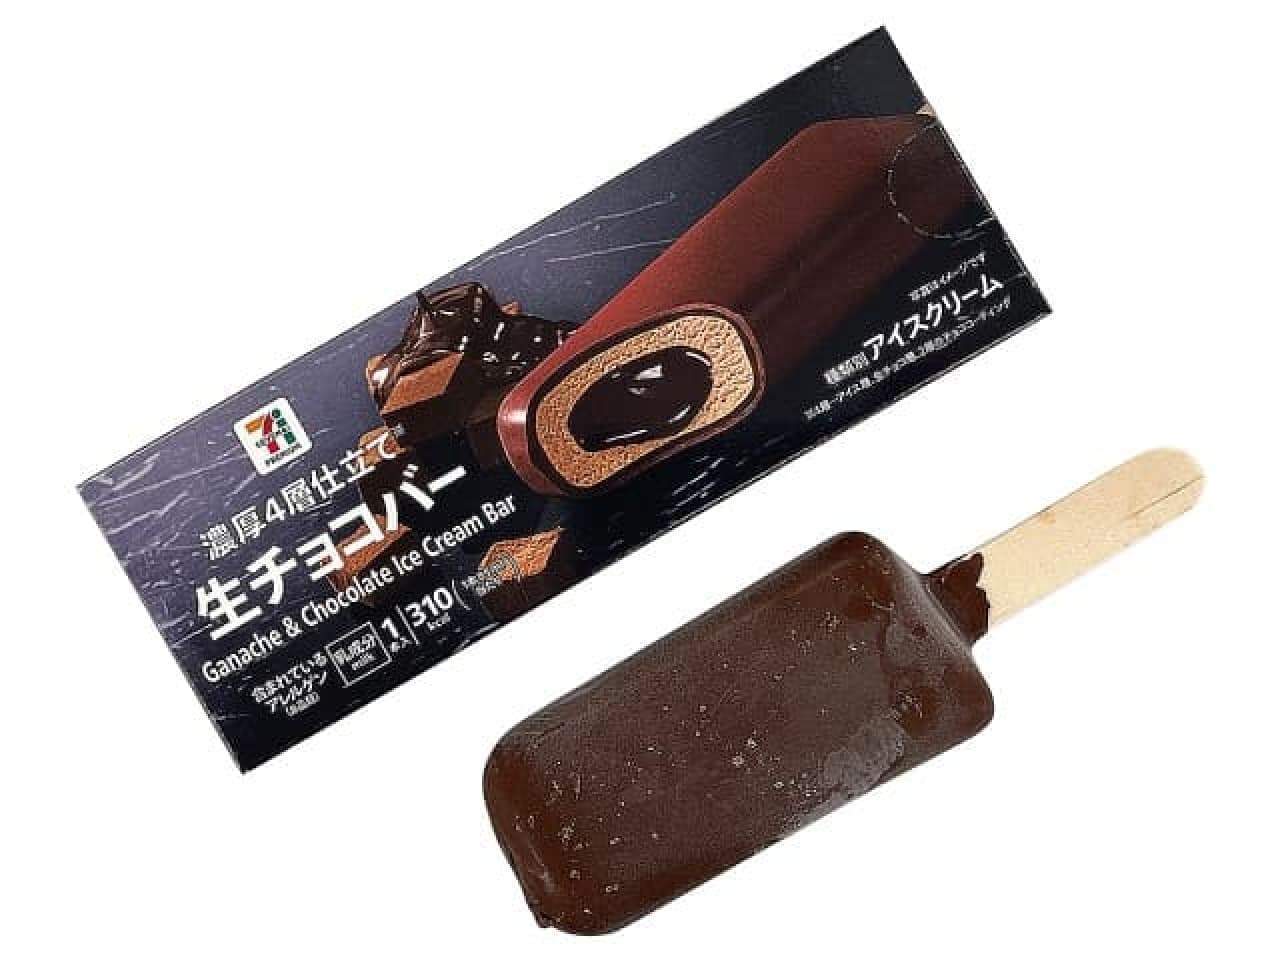 7-ELEVEN "7-ELEVEN Premium Raw Chocolate Bar